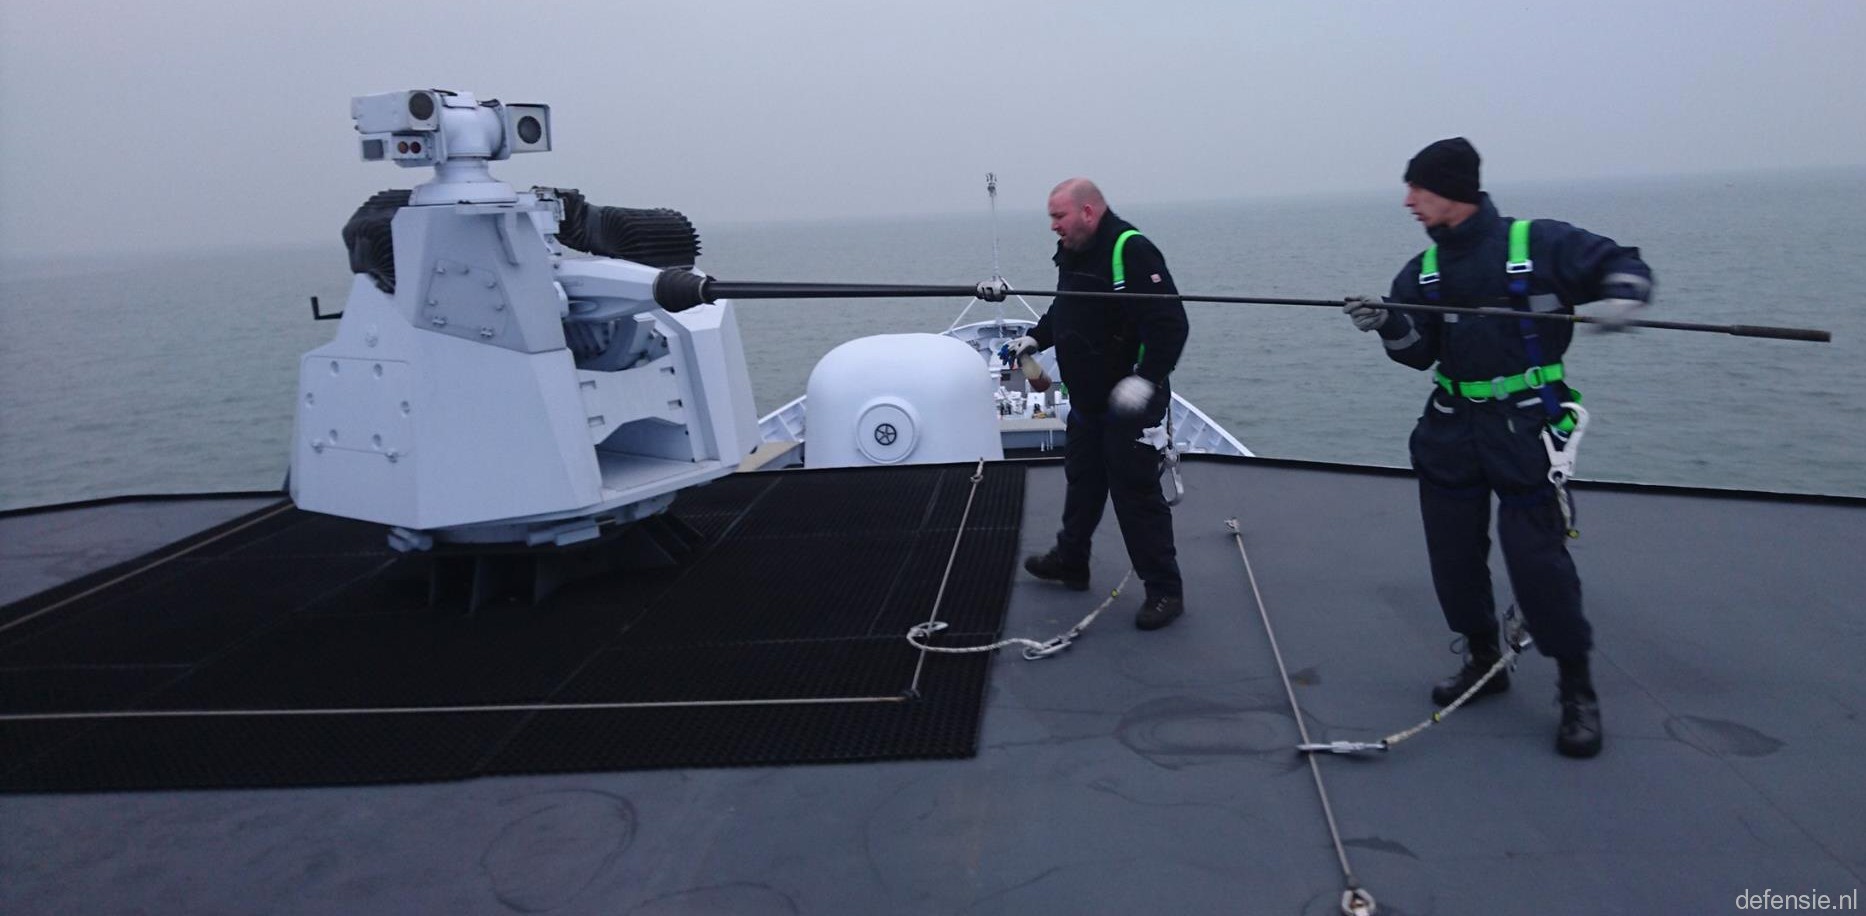 p-841 hnlms zeeland holland class offshore patrol vessel opv royal netherlands navy oto melara leonardo marlin ws 30mm remote weapon system